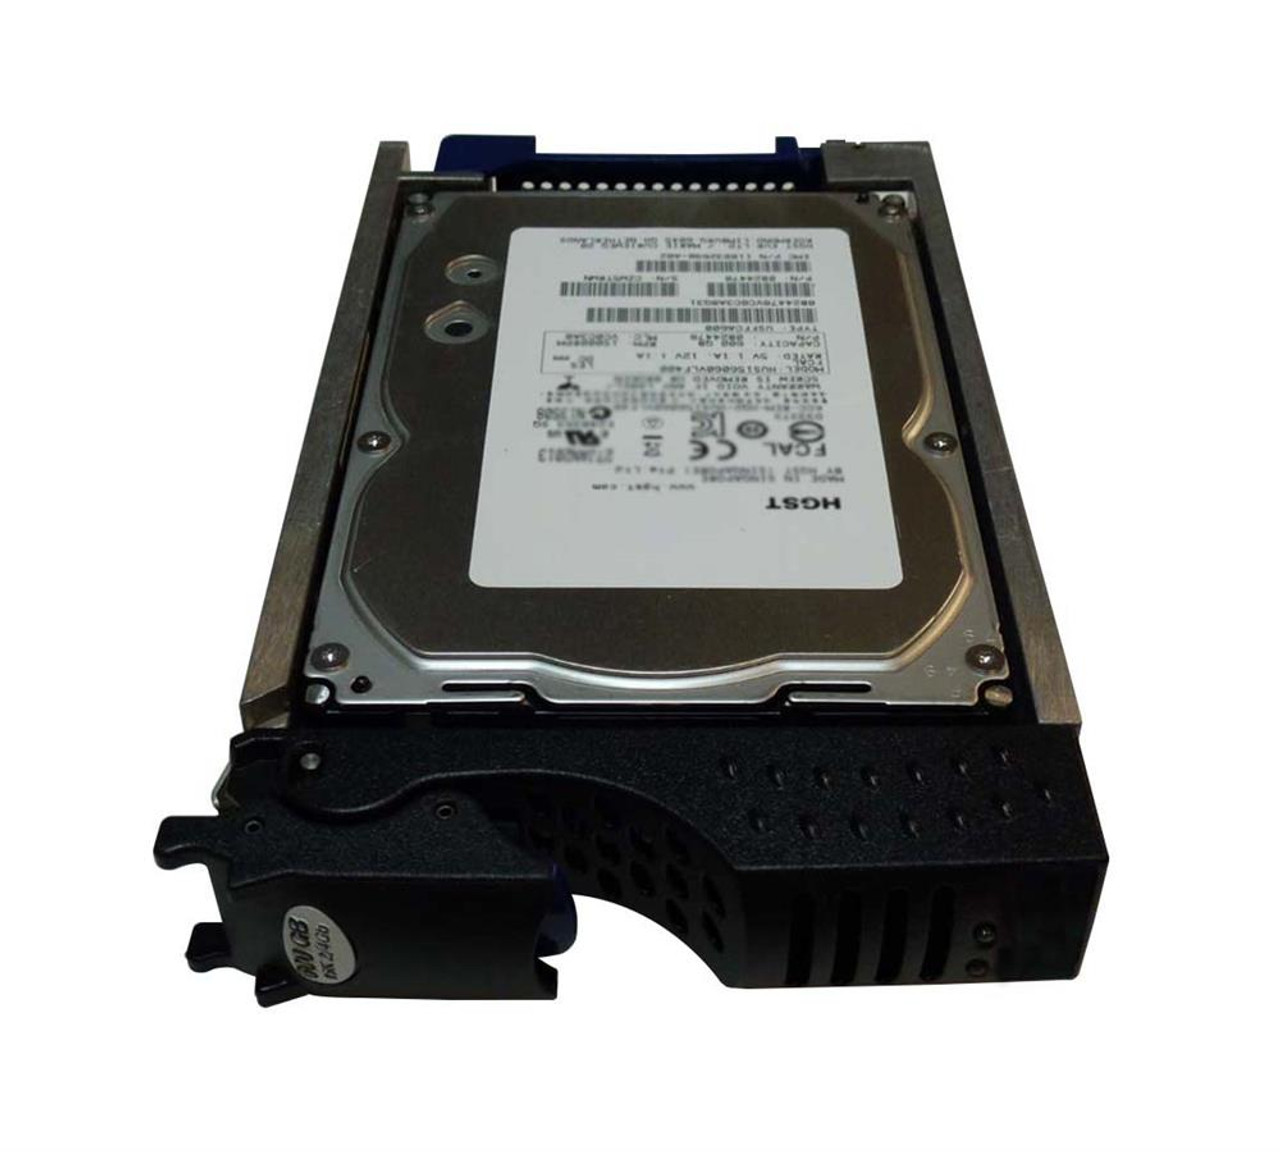 AT47220005BTU EMC 2TB 7200RPM SAS 2.5-inch Internal Hard Drive Upgrade with RAID5 (3+1 Configuration) for VMAX 10K